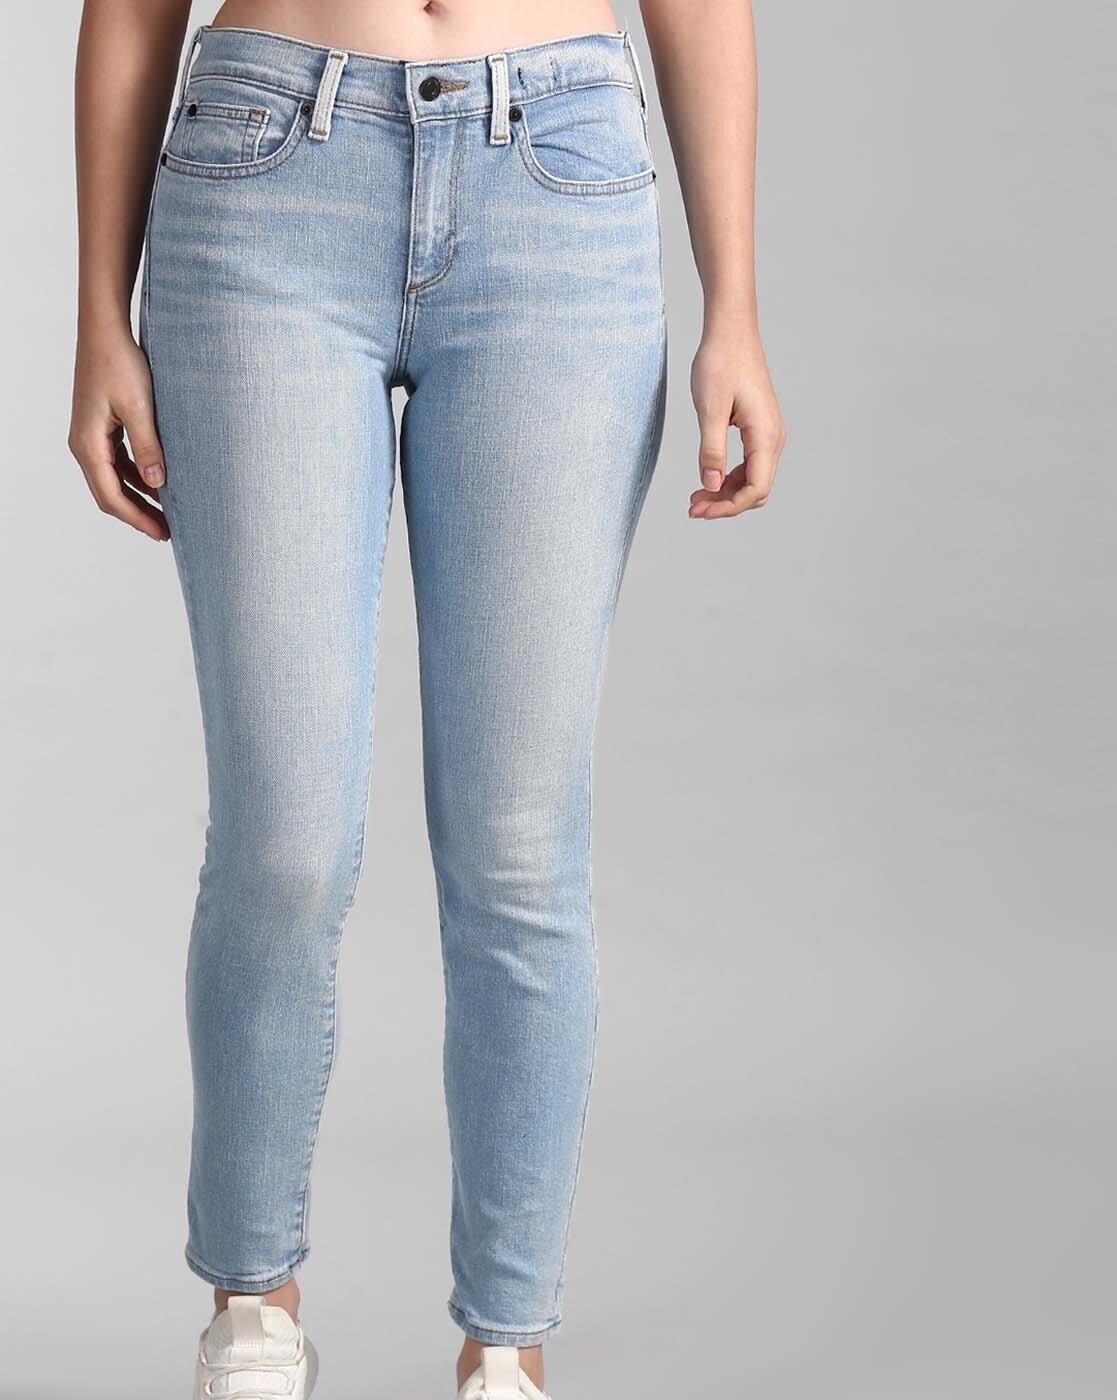 gap light blue jeans